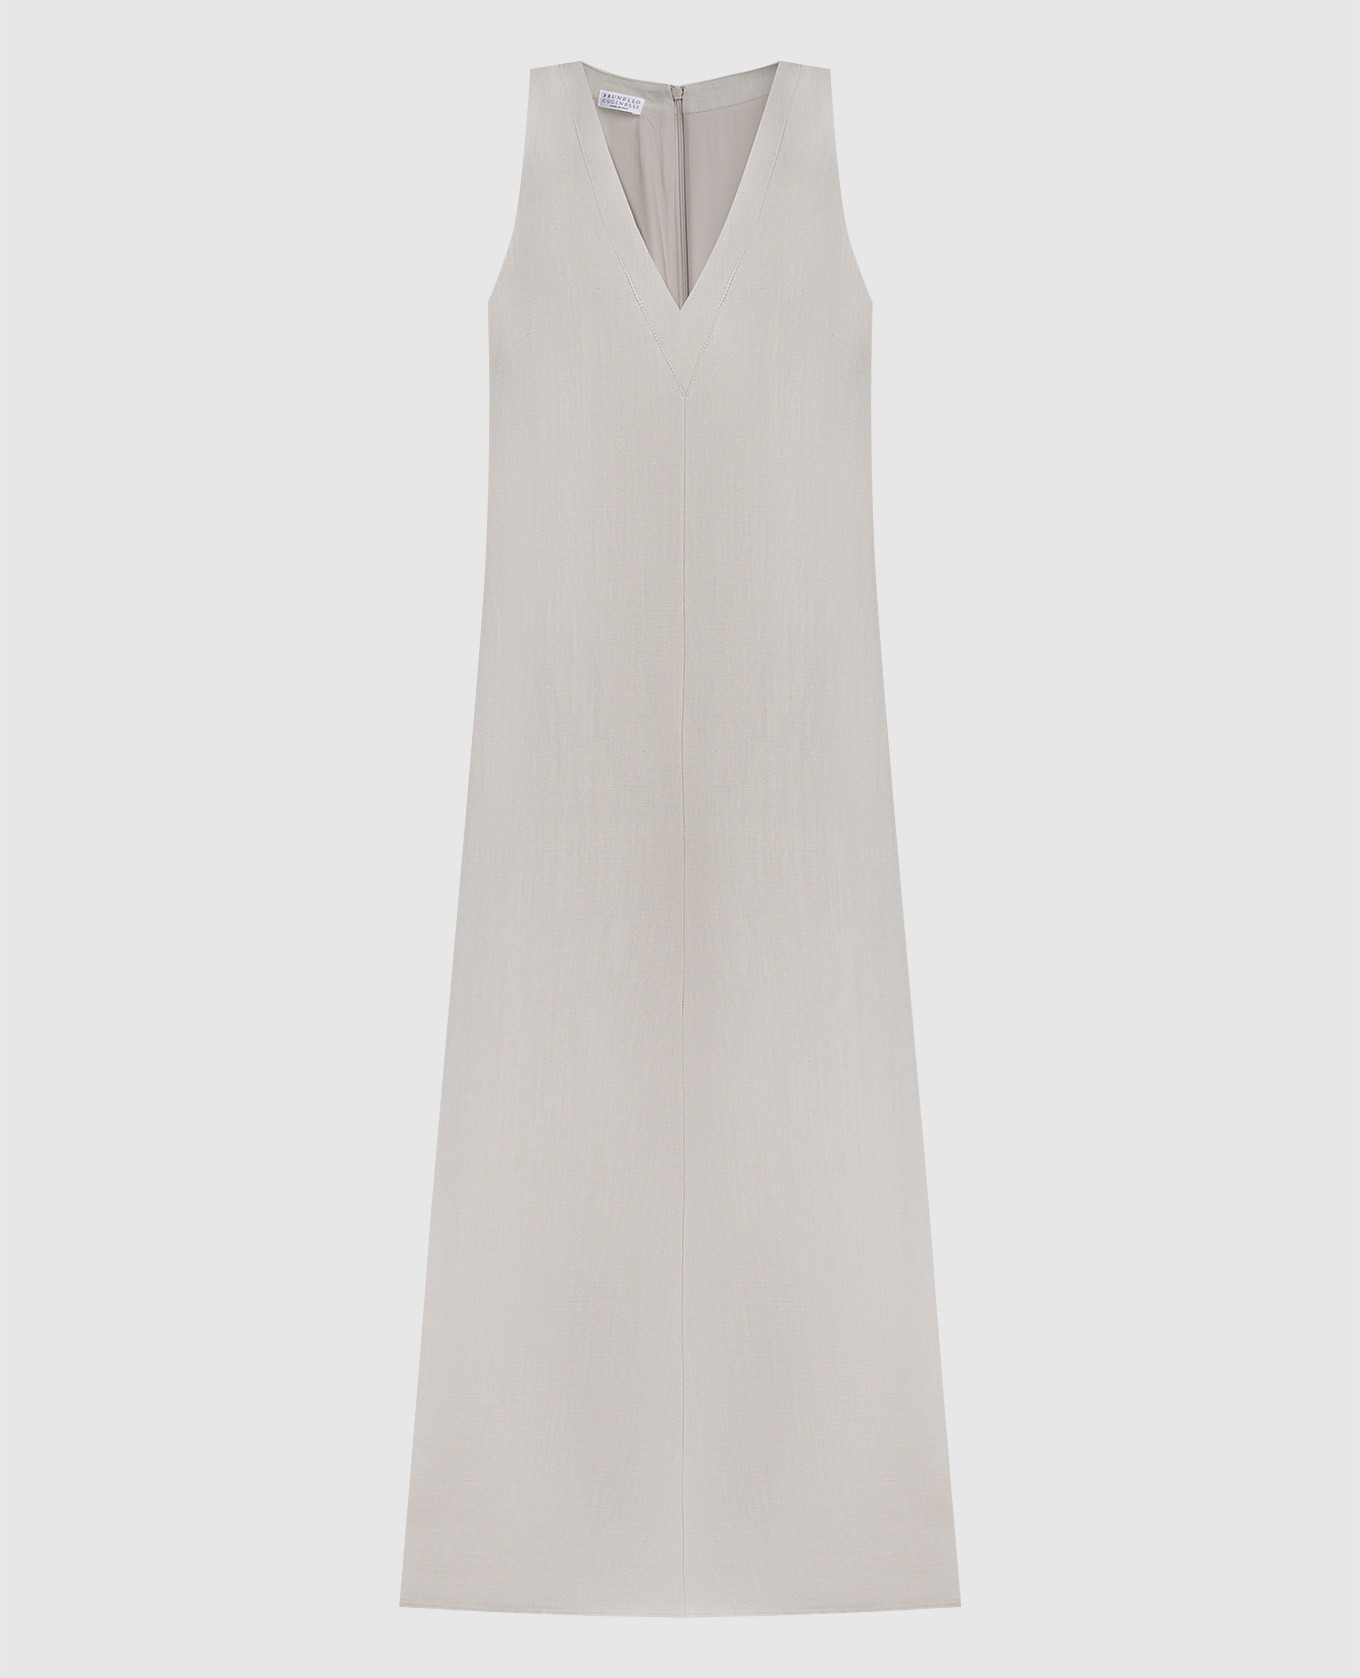 Gray linen dress with monil chain